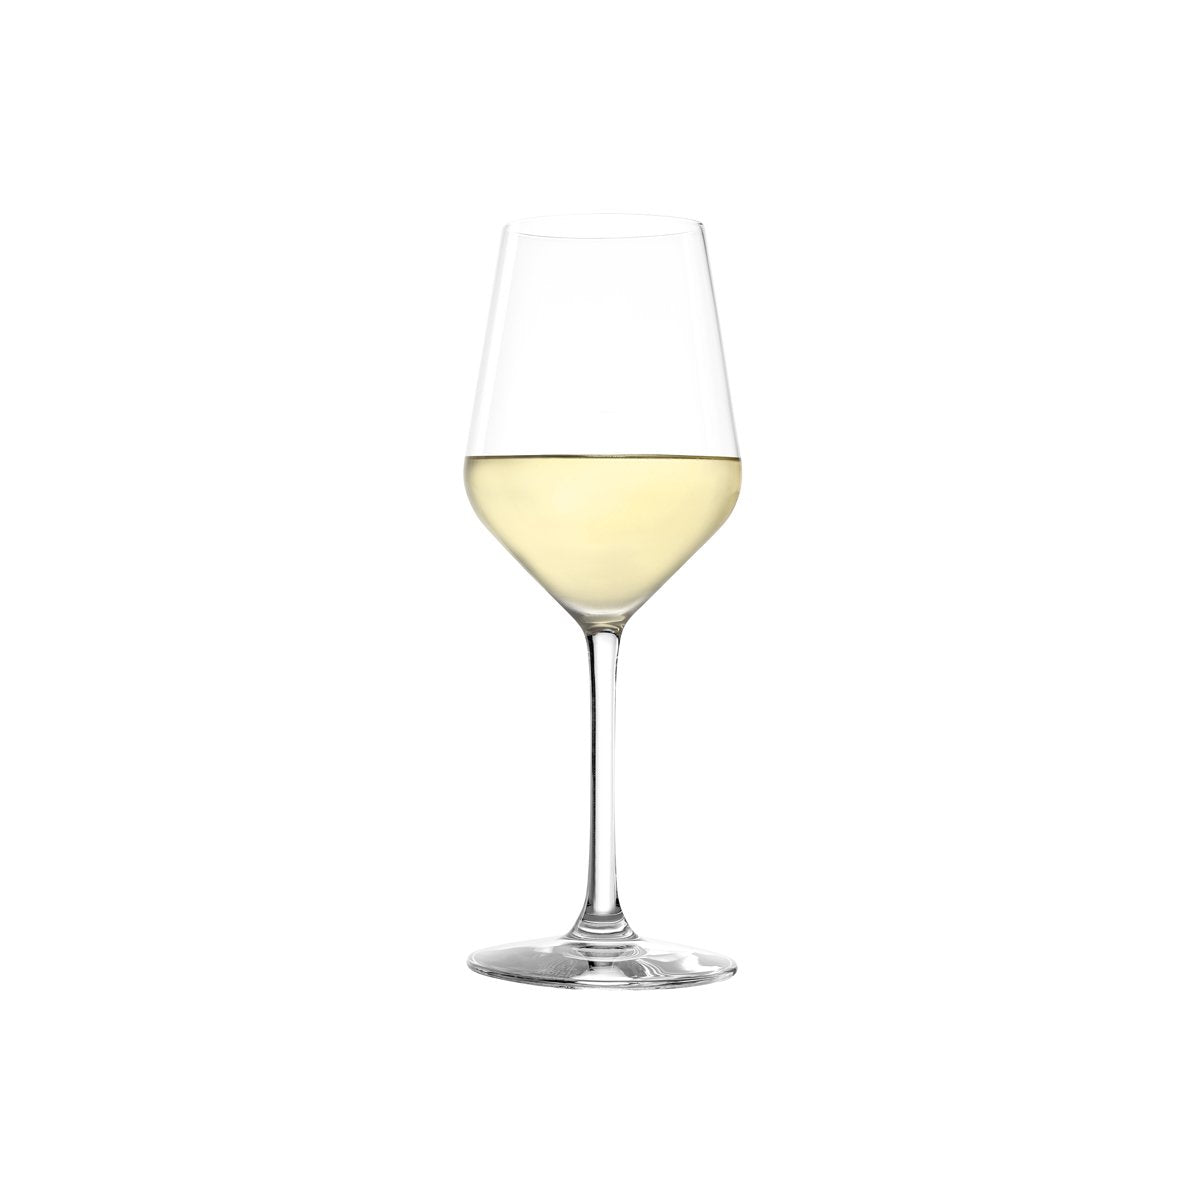 360-985 Stolzle Revolution White Wine 365ml Tomkin Australia Hospitality Supplies